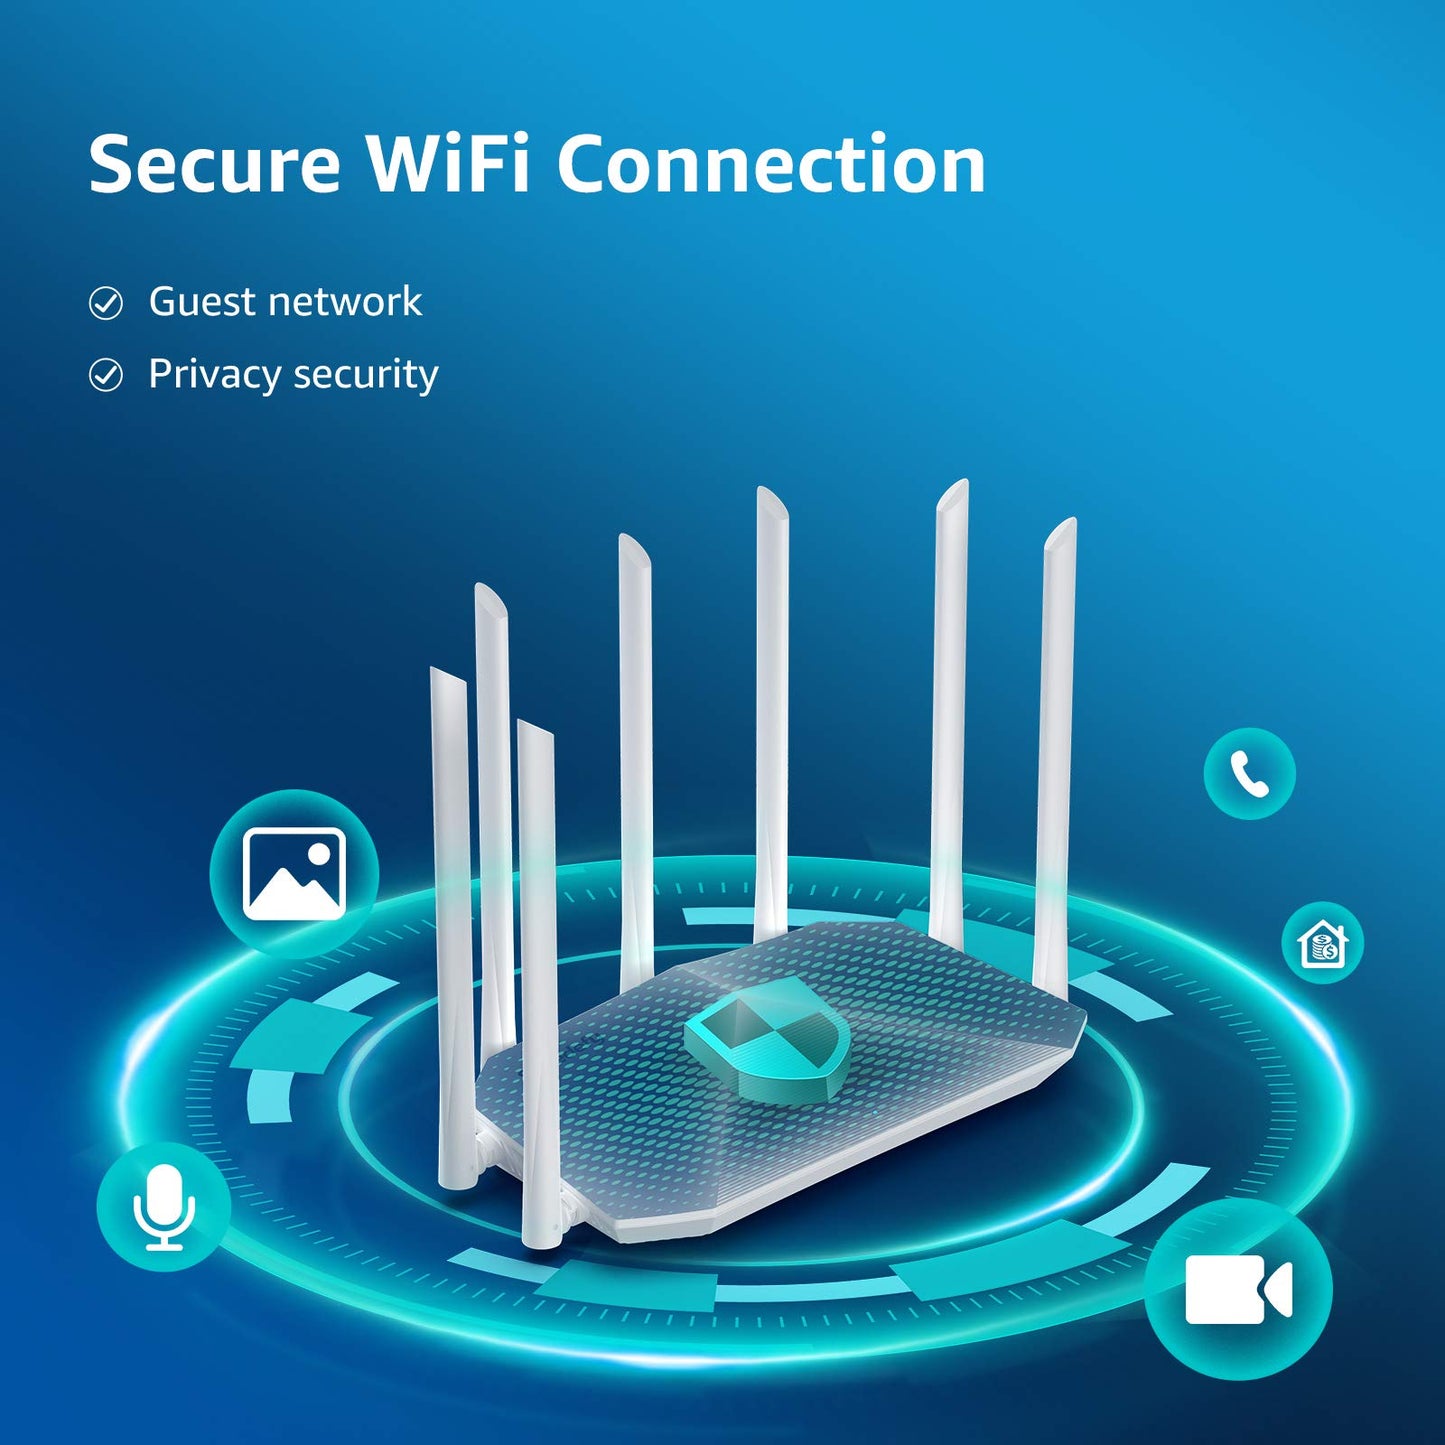 Speedefy Gigabit WiFi Smart Wireless Router - Dual Band AC2100 4x4 MU-MIMO, 7 Antennas, Strong Signal, High Speed, Easy Setup (Model K7W, White)